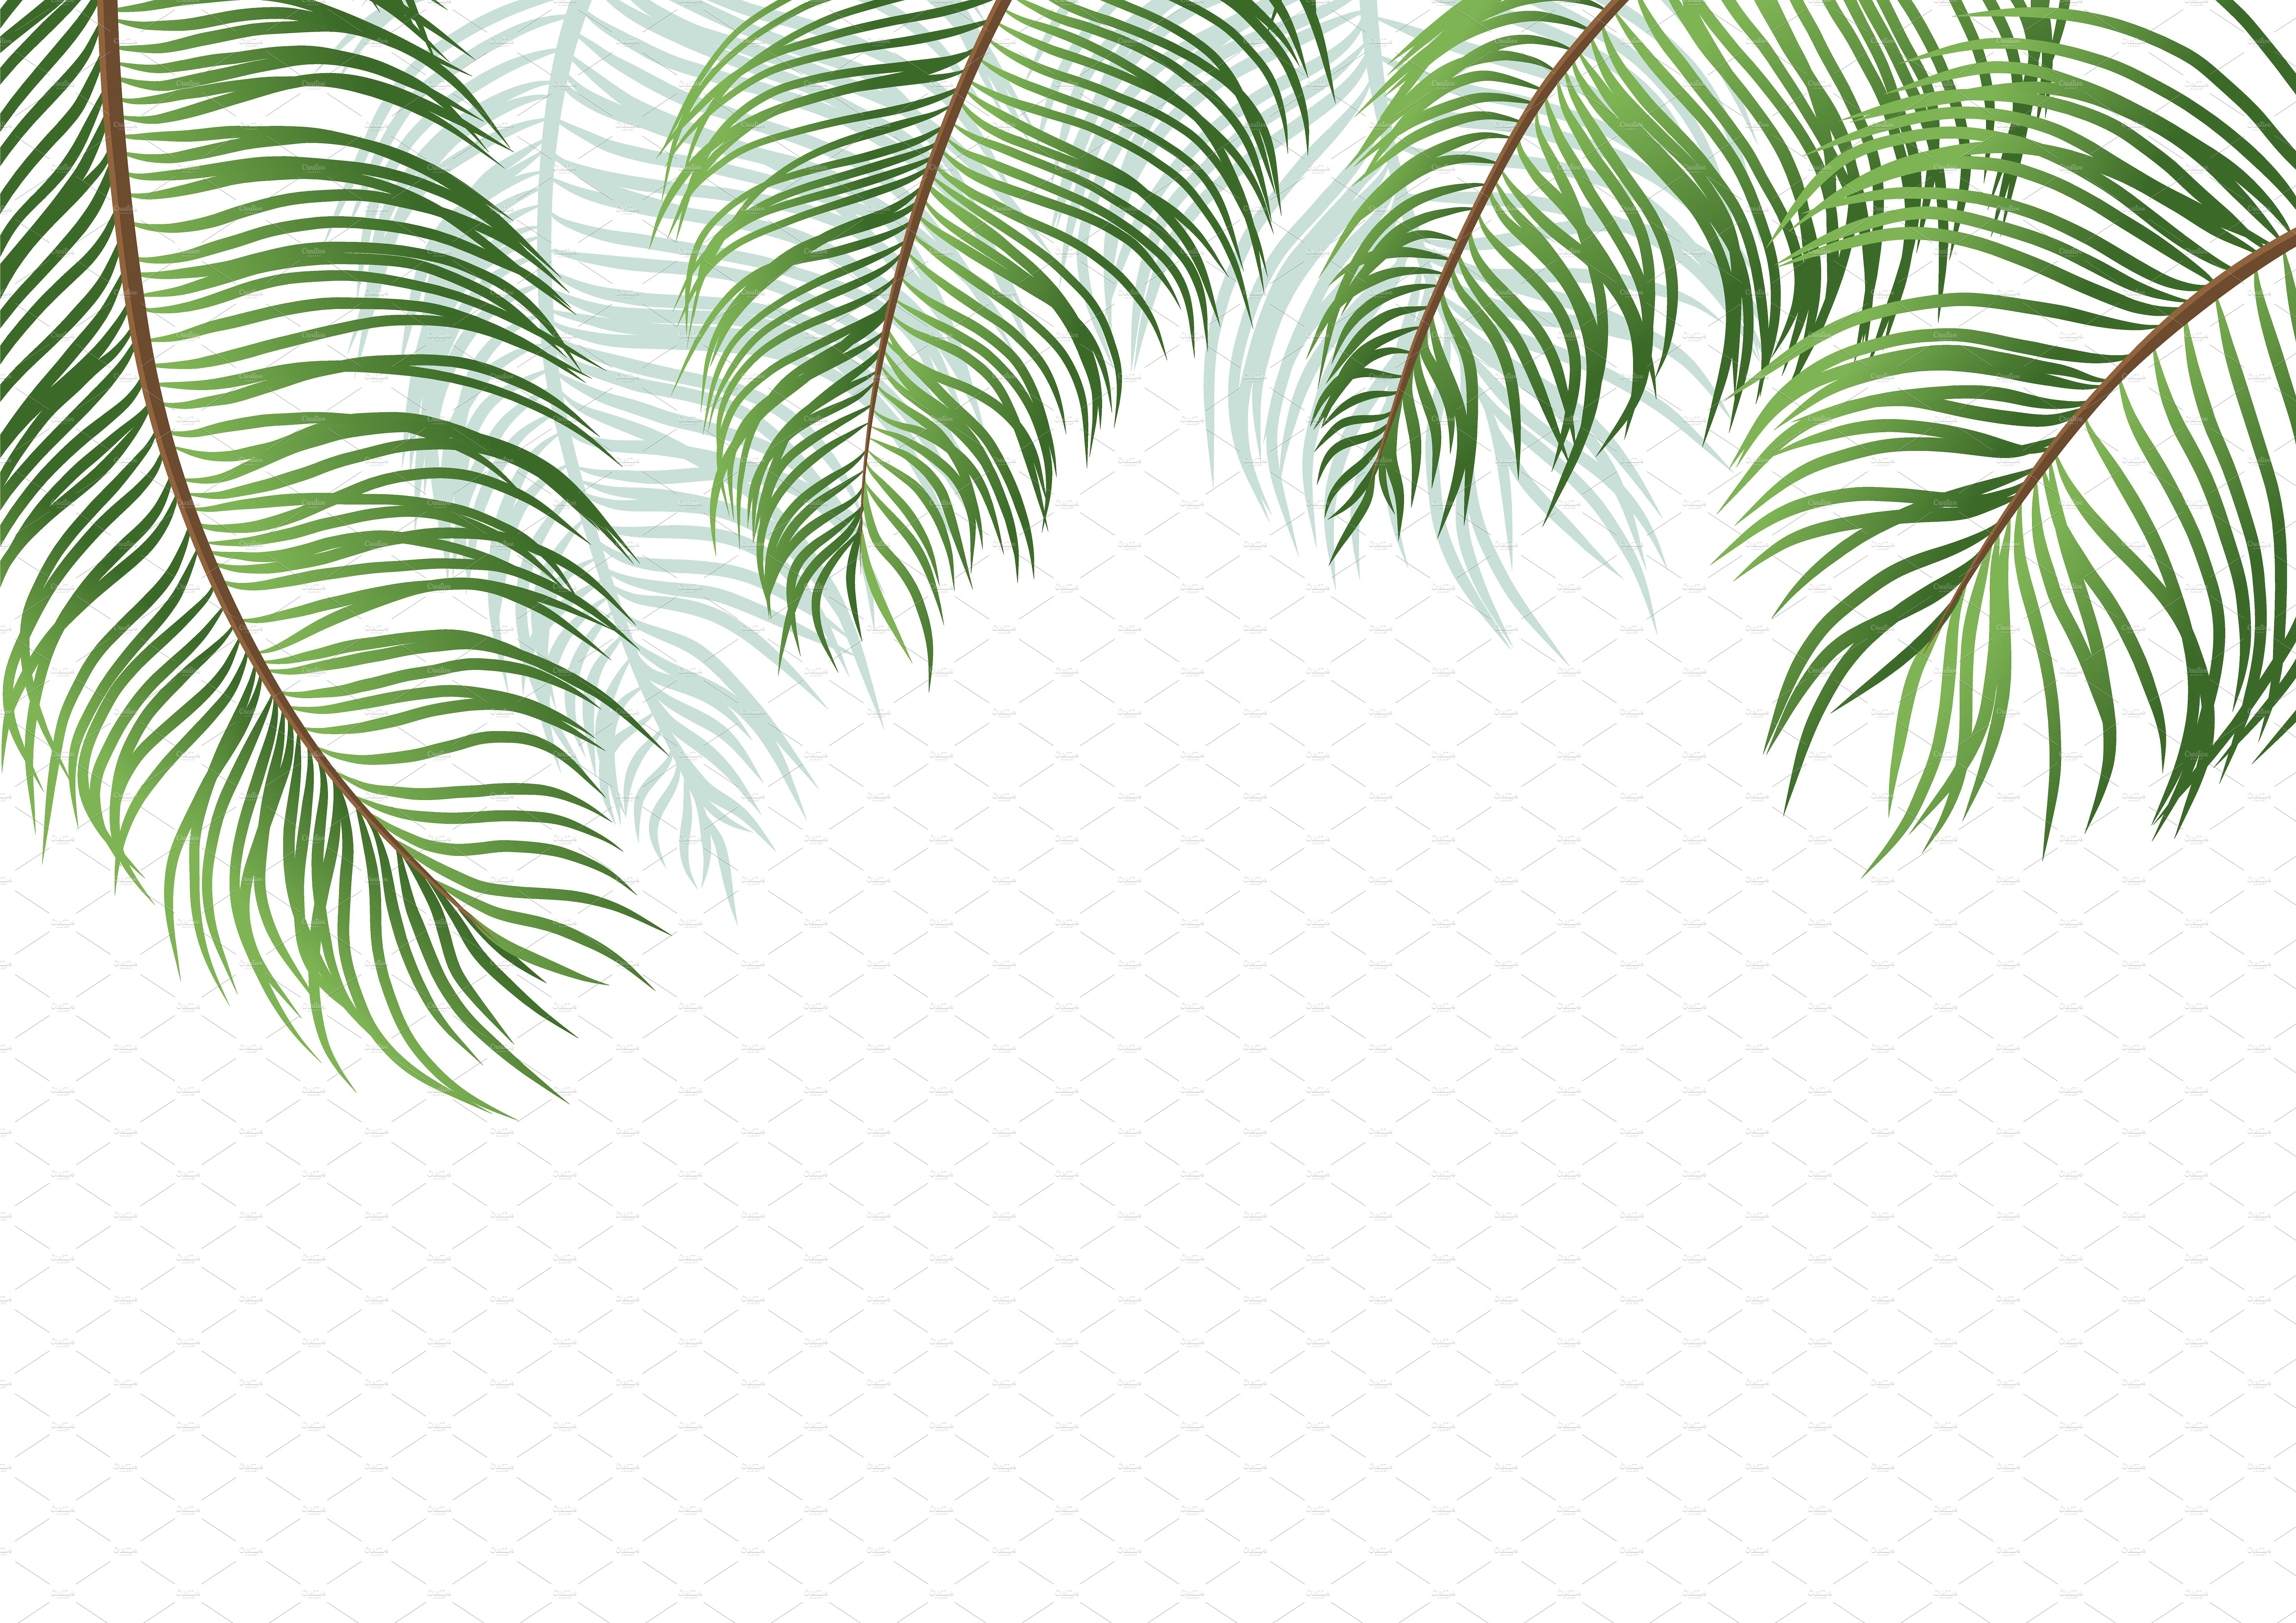 Palm leaves on white background ~ Illustrations ~ Creative Market